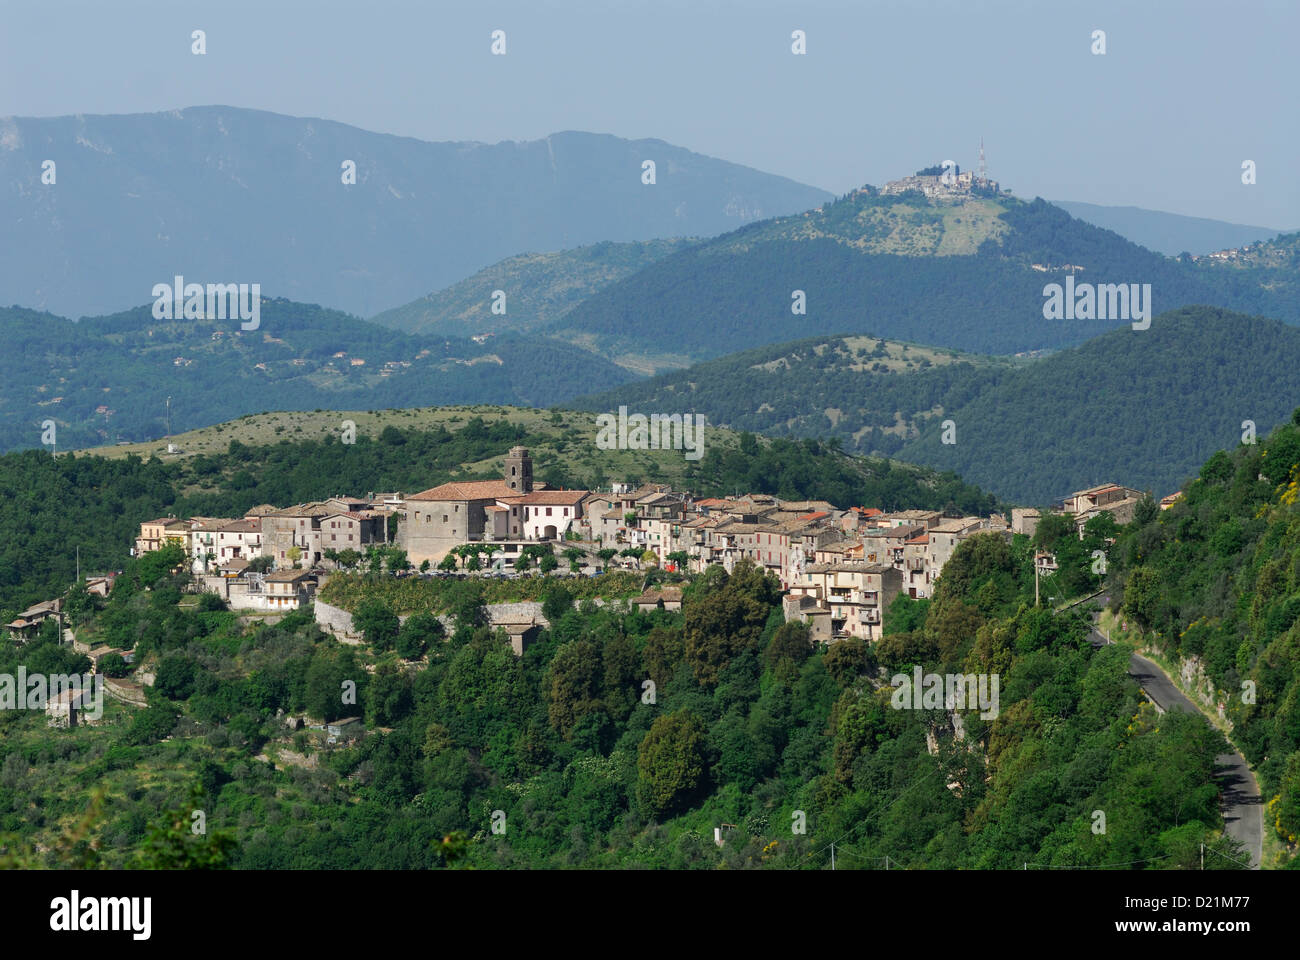 Collepardo. Lazio. Italy. The hilltop towns of Collepardo, & Fumone in the background. Stock Photo